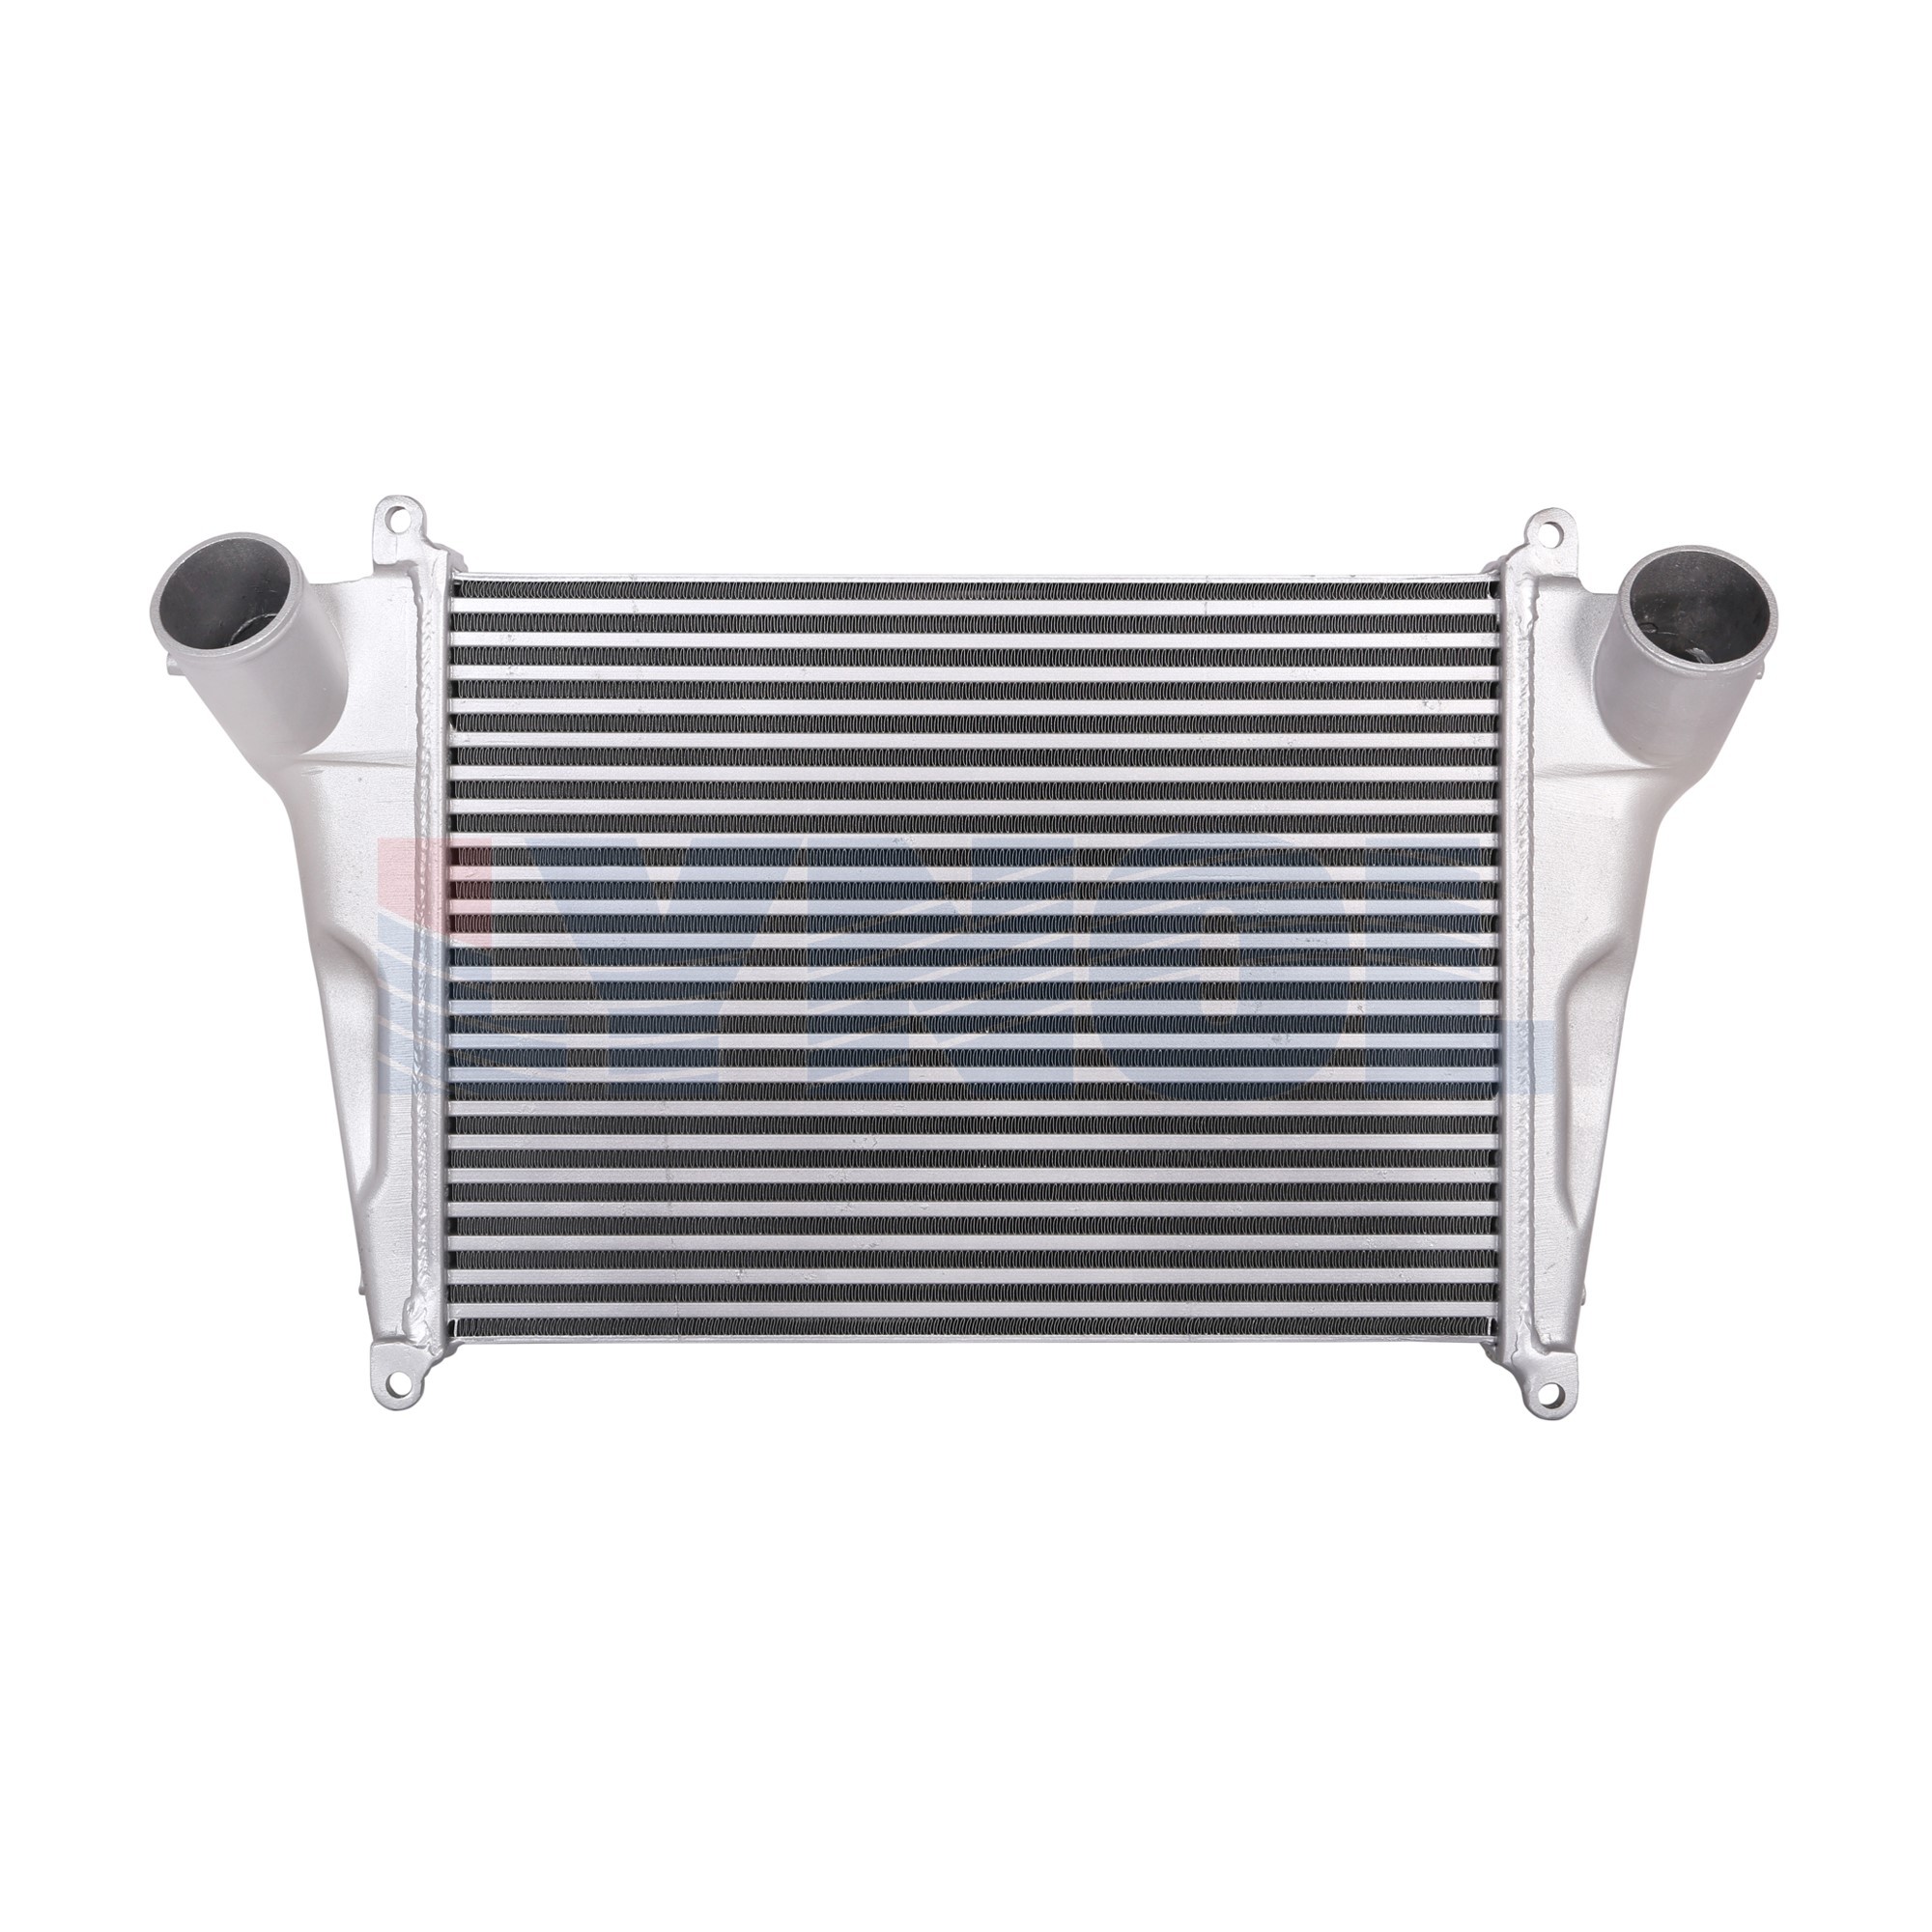 2410-001 - GMC / Isuzu Charge Air Cooler